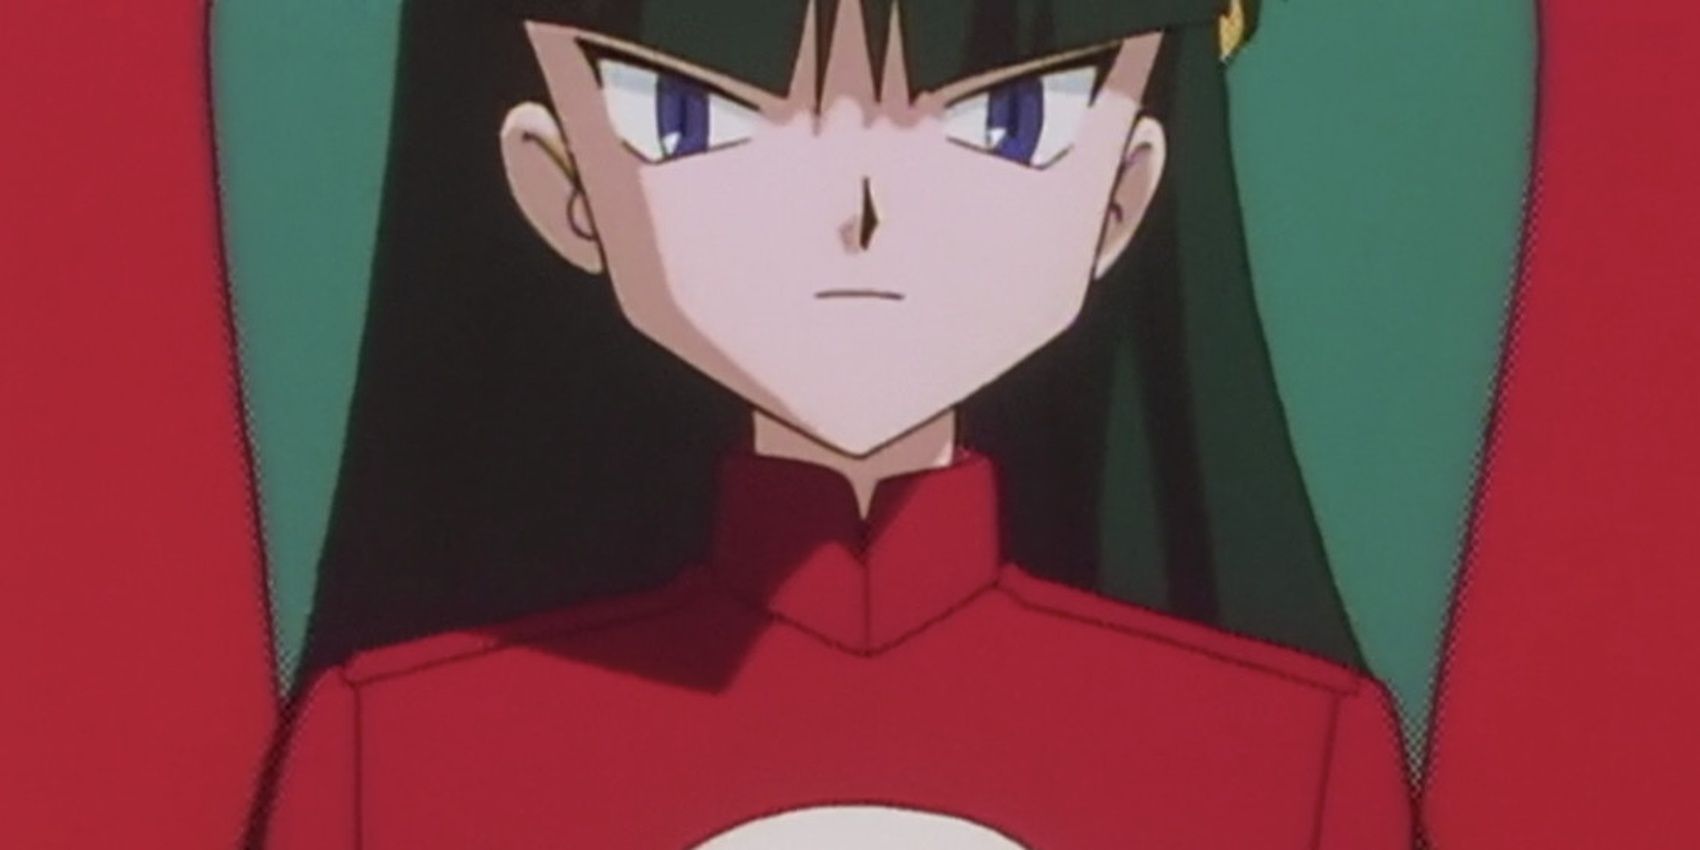 Sabrina looking menacing in the Pokemon anime